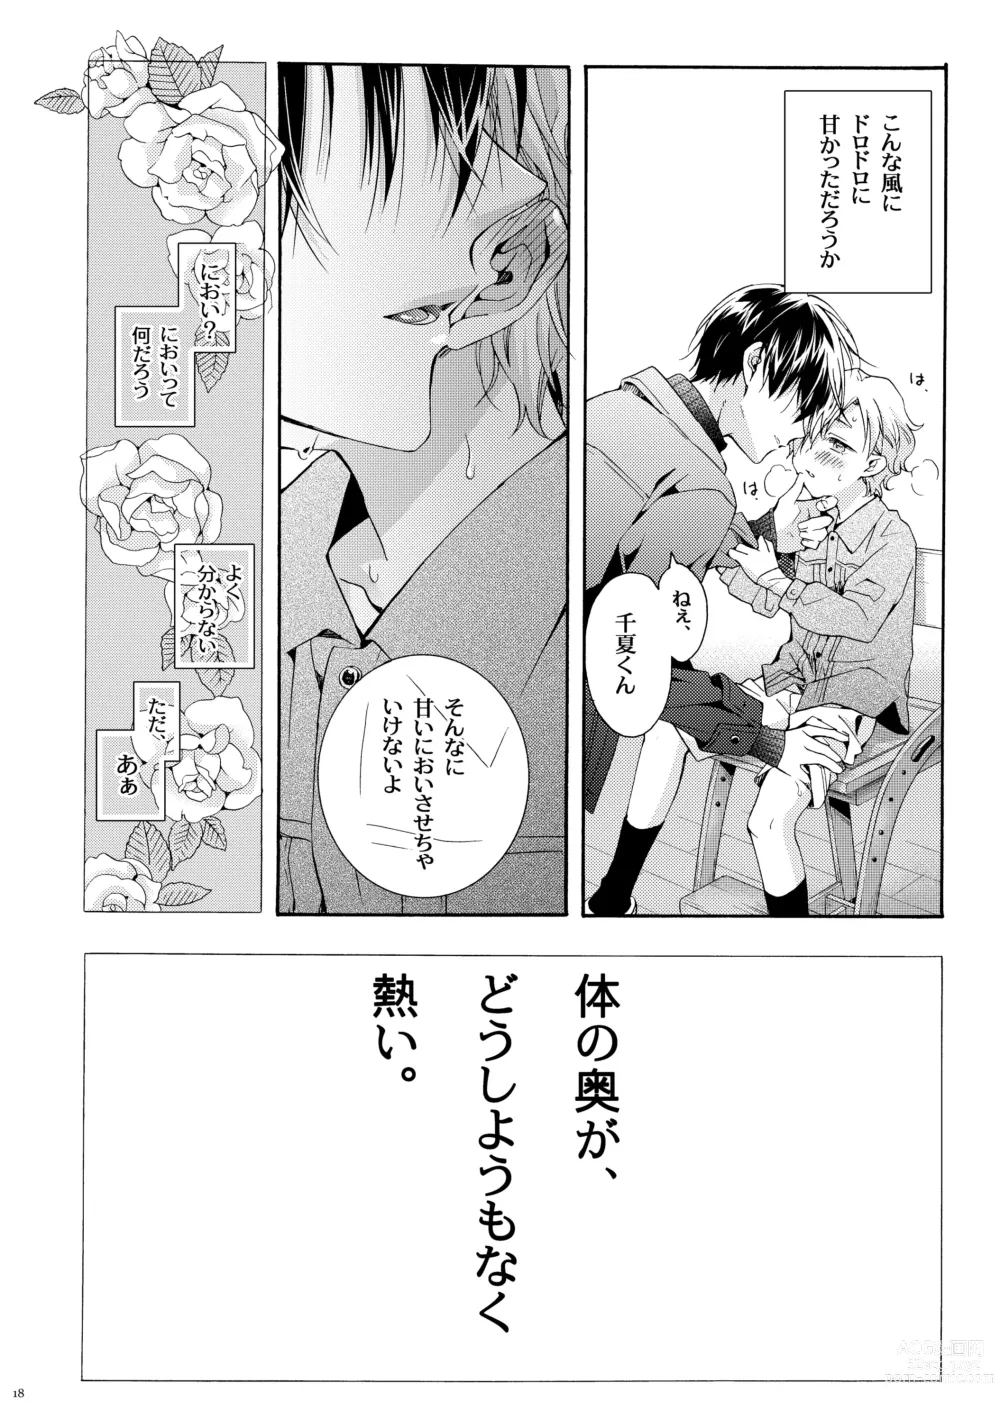 Page 17 of manga Boku no Tame no Omega